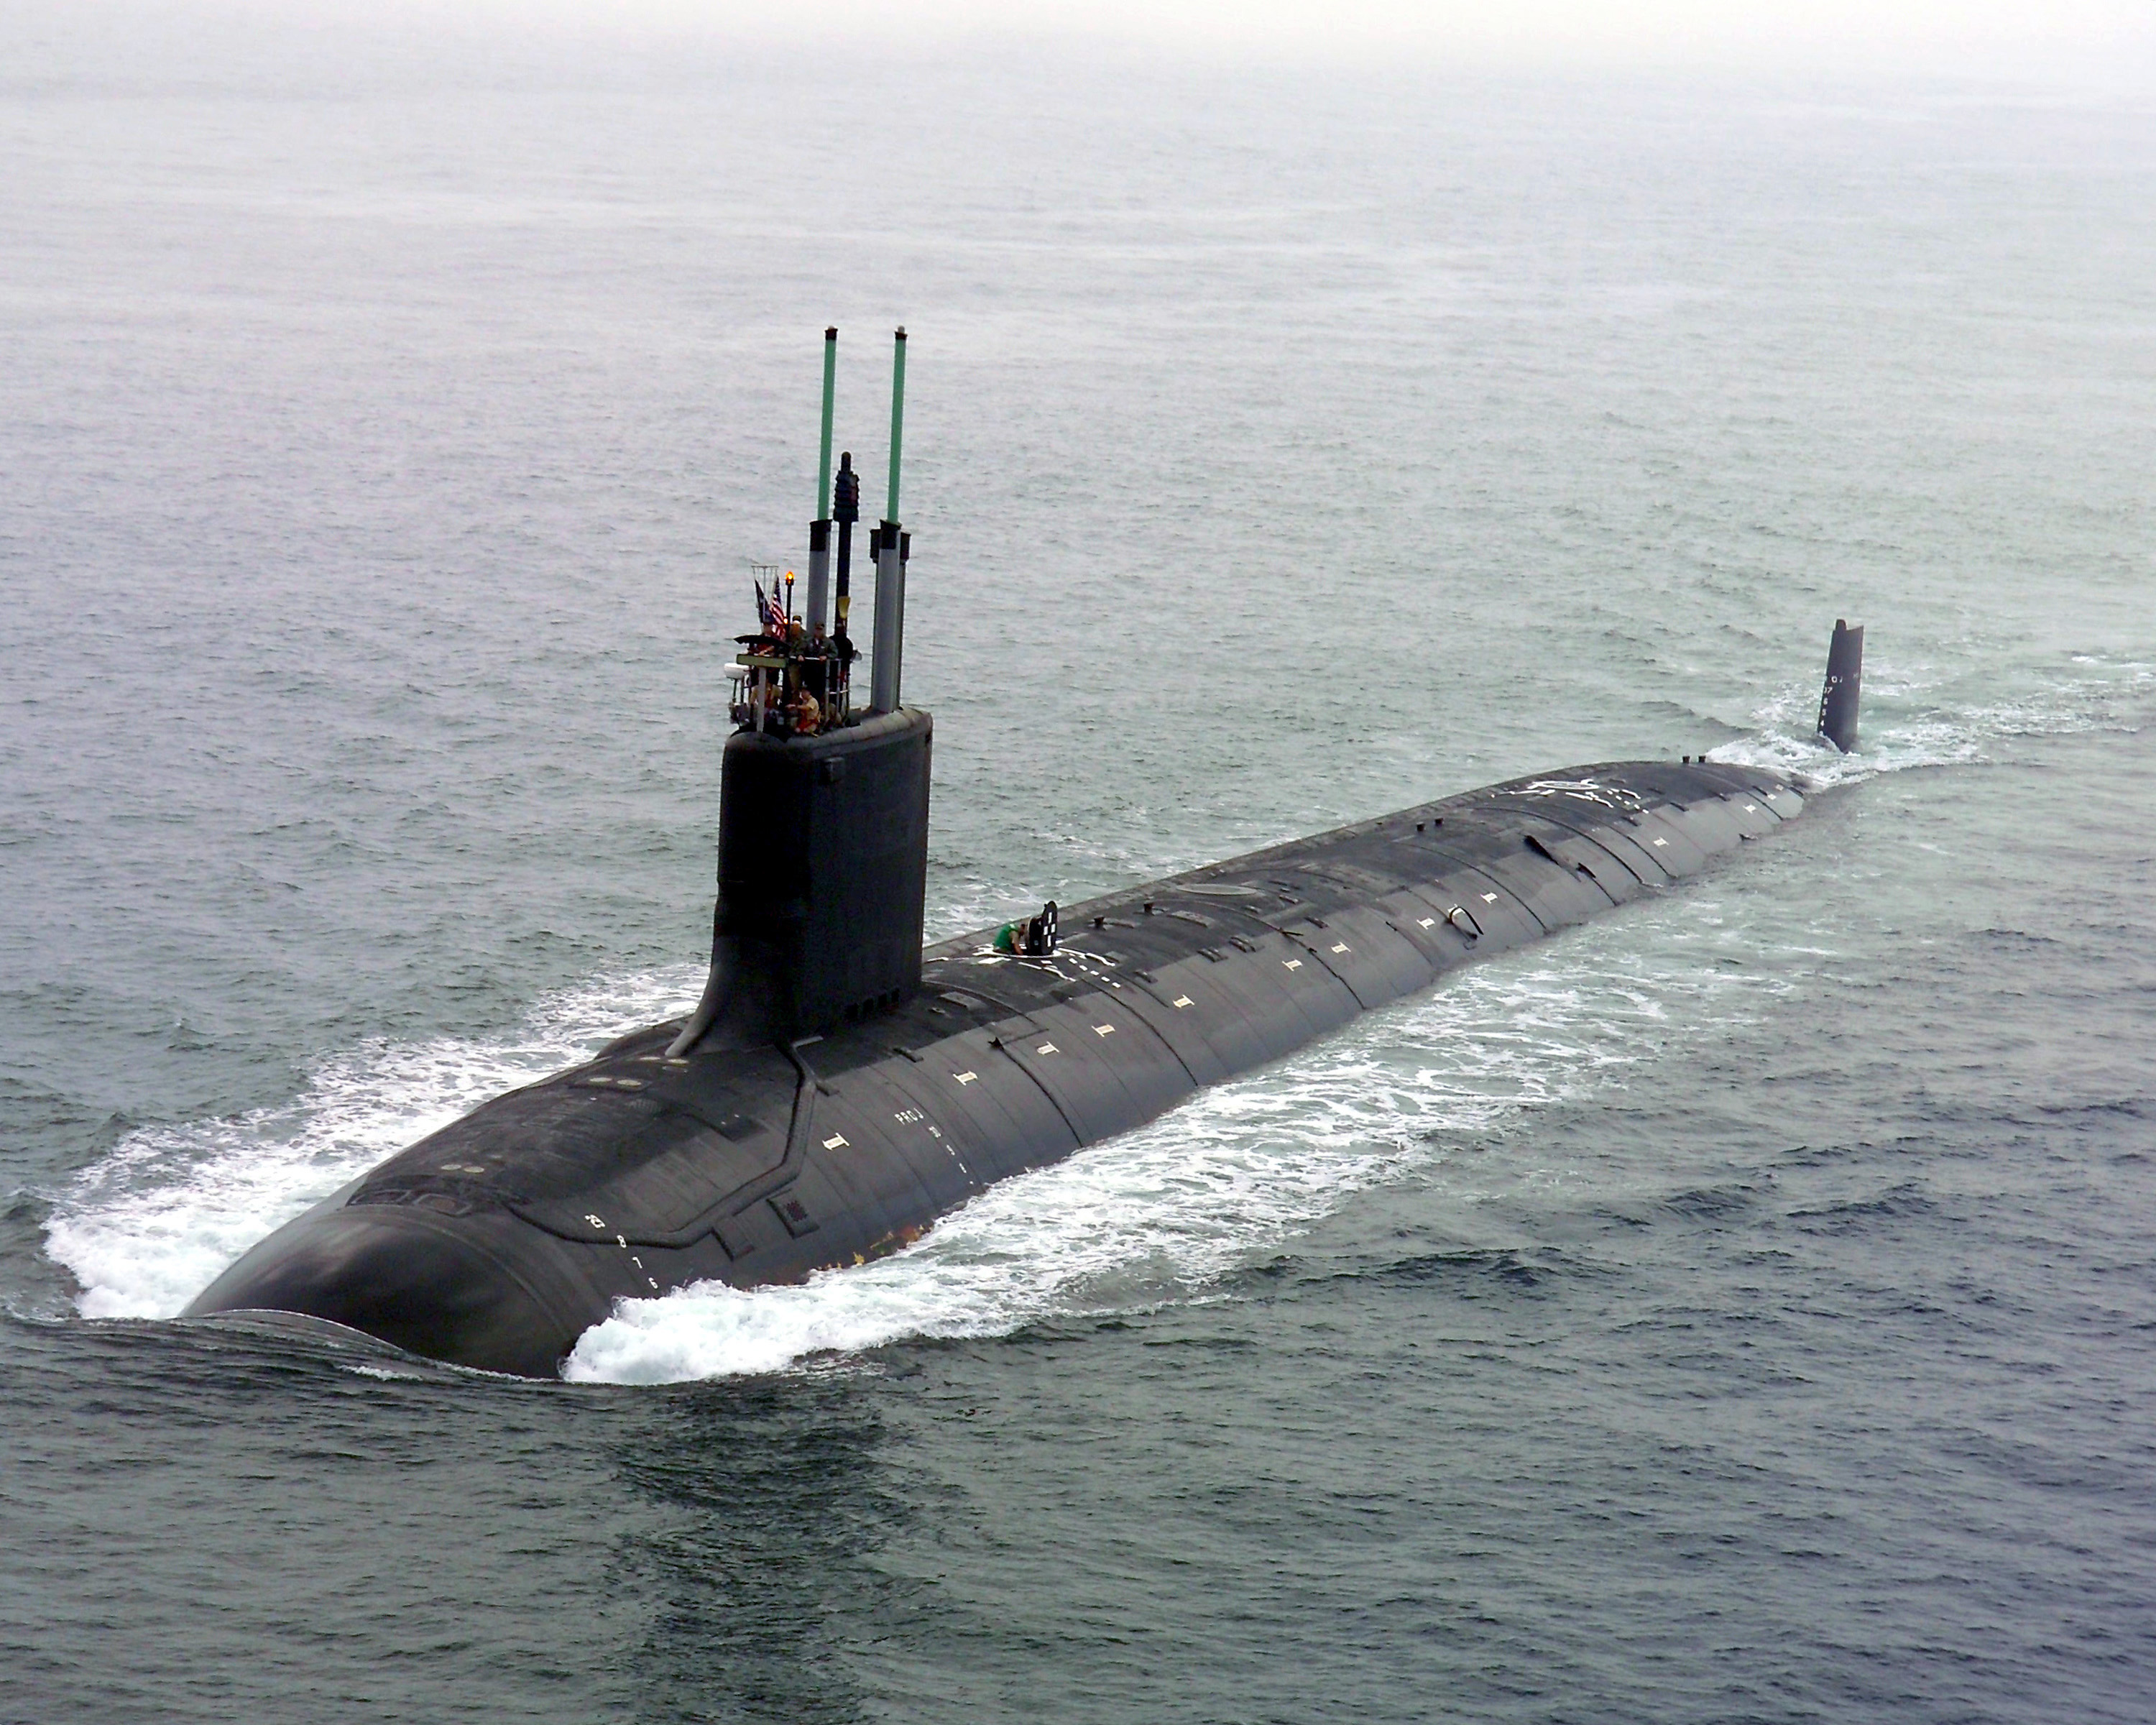 US nuclear-powered submarine PCU Virginia